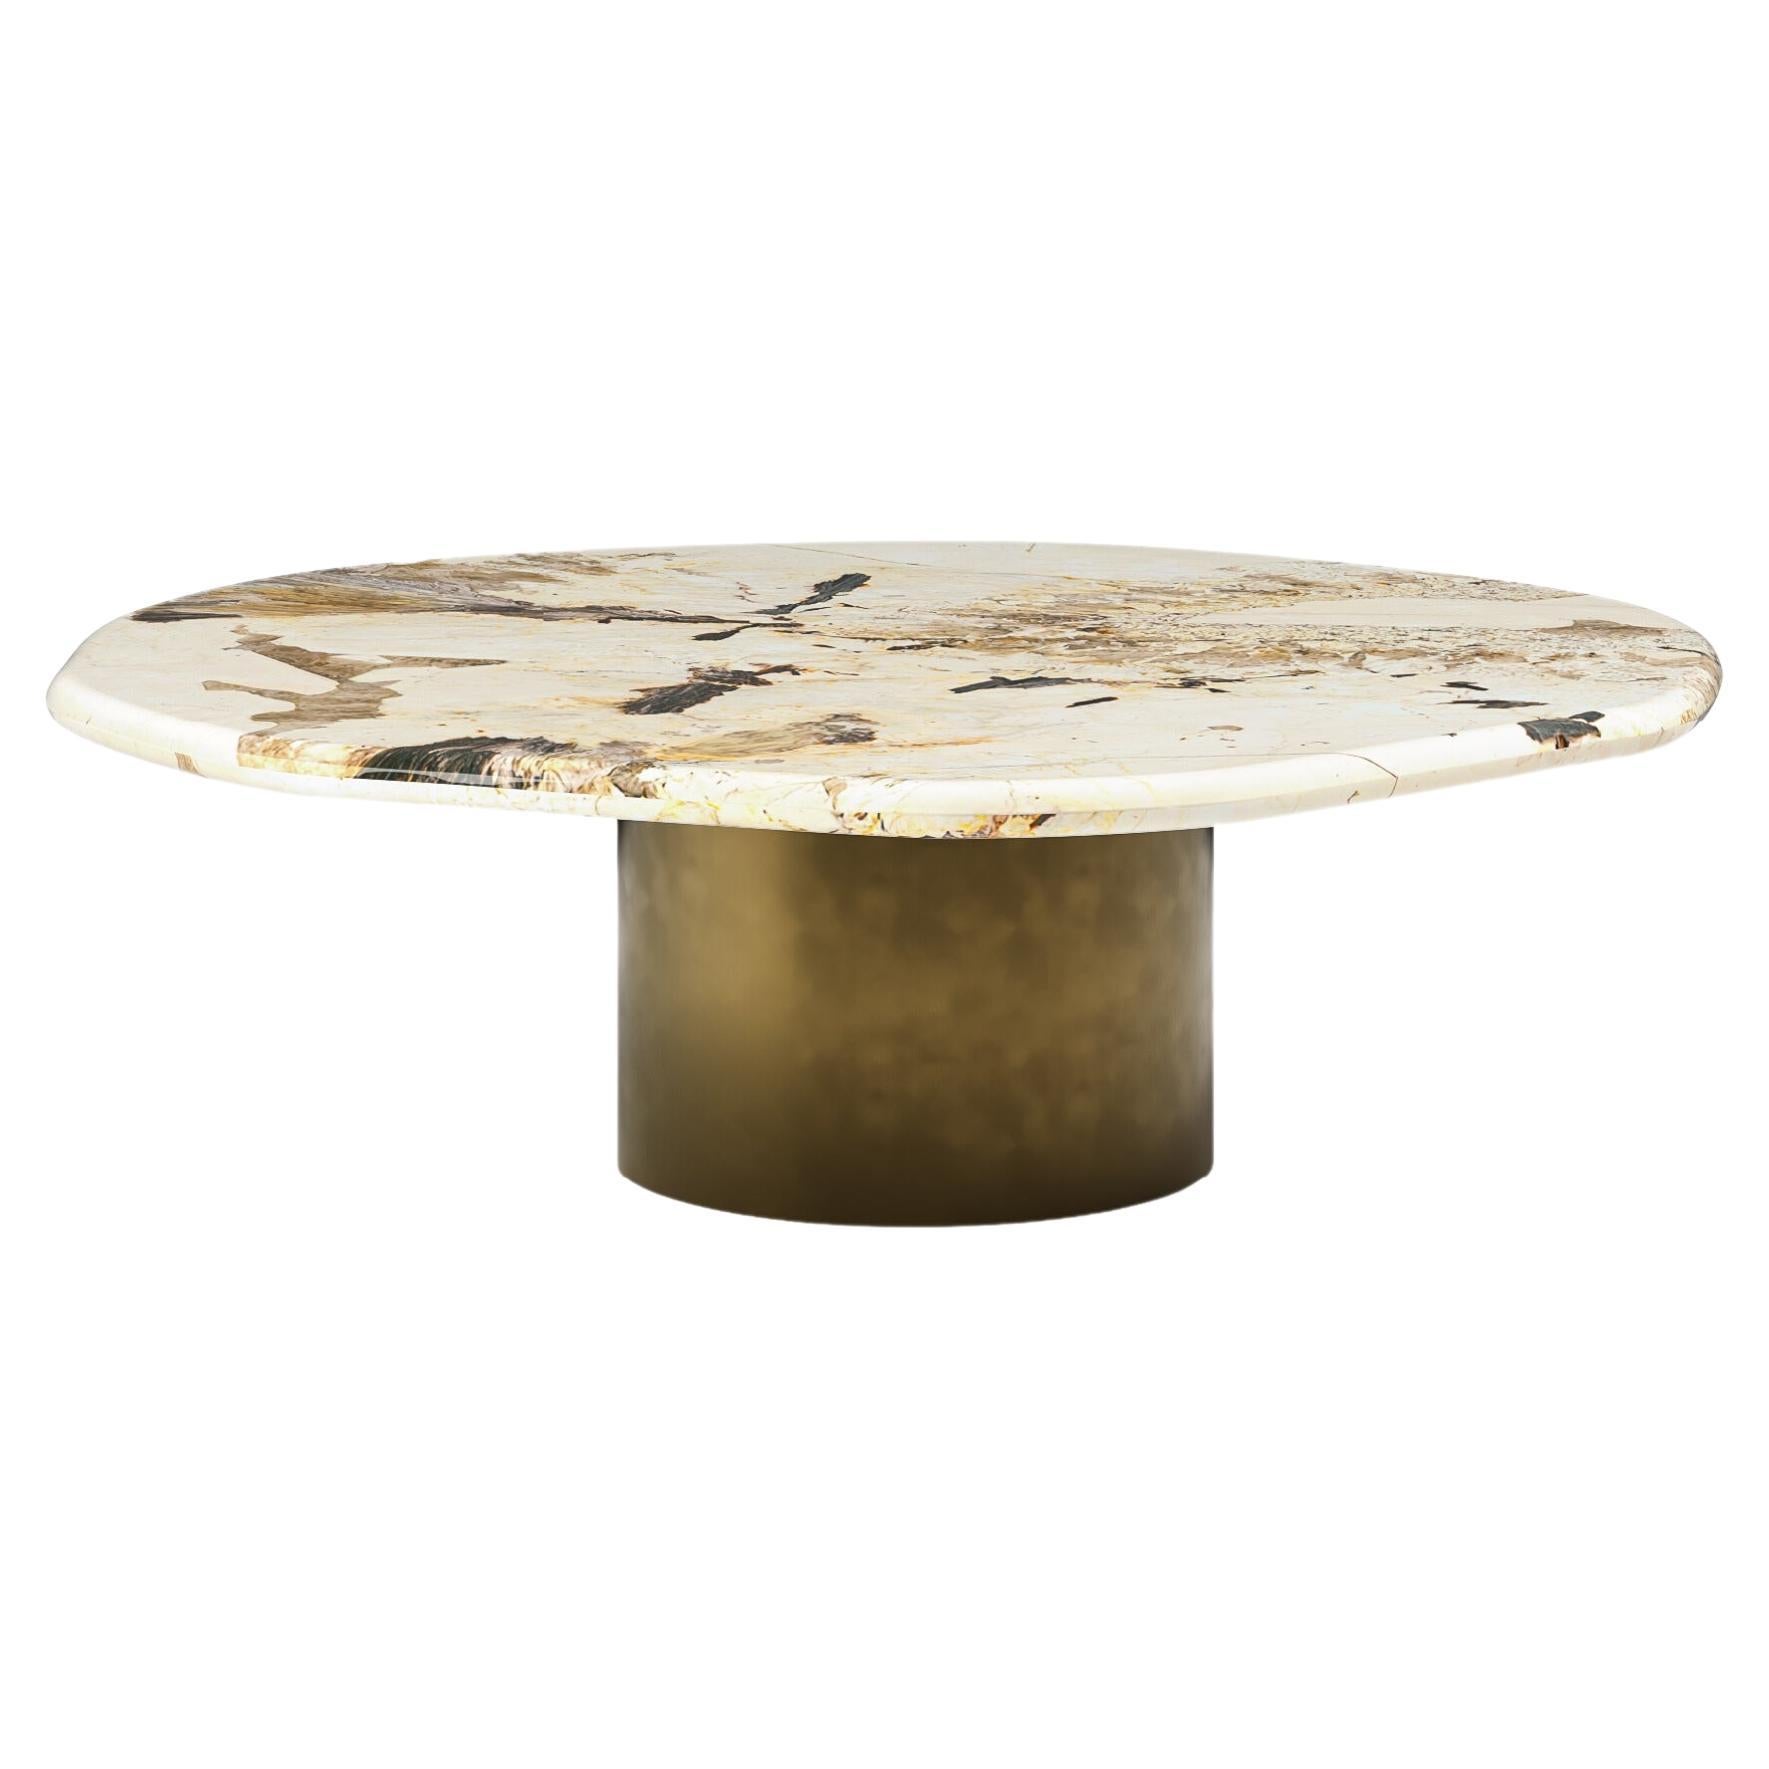 FORM(LA) Lago Round Coffee Table 36”L x 36”W x 14”H Quartzite & Antique Bronze For Sale